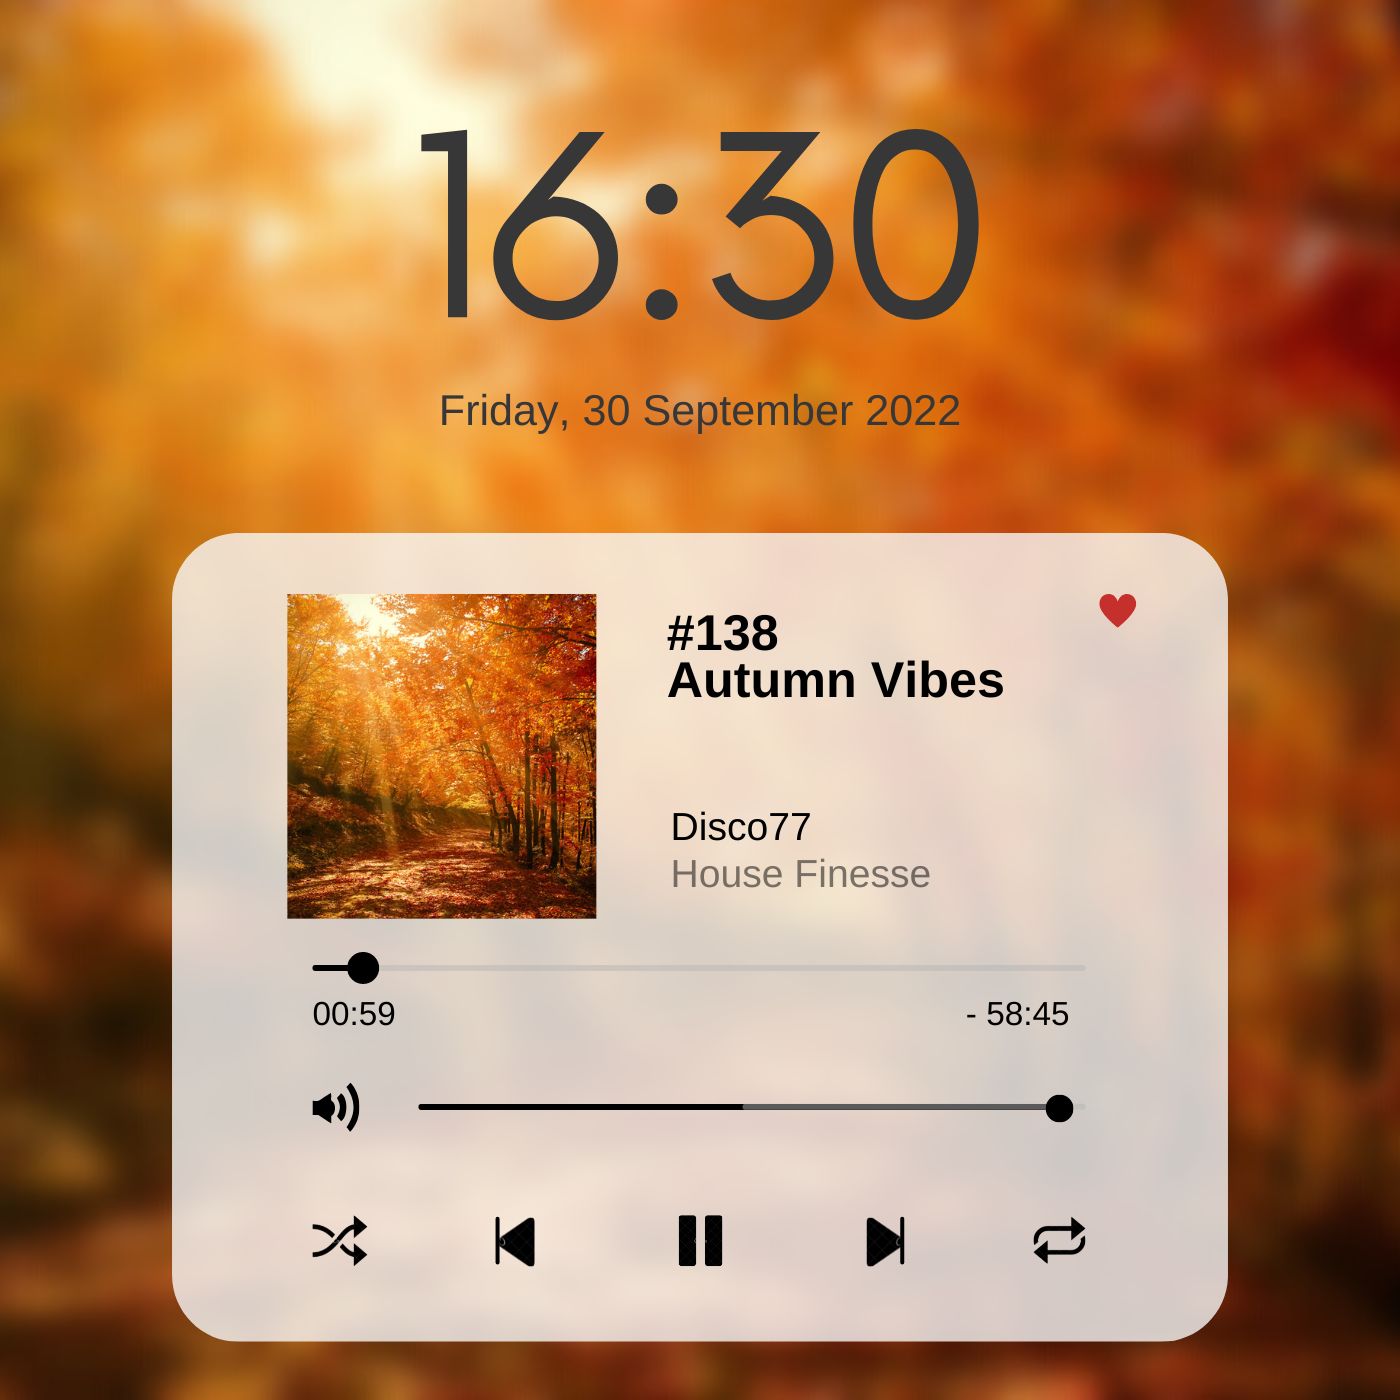 Autumn Vibes with Disco77